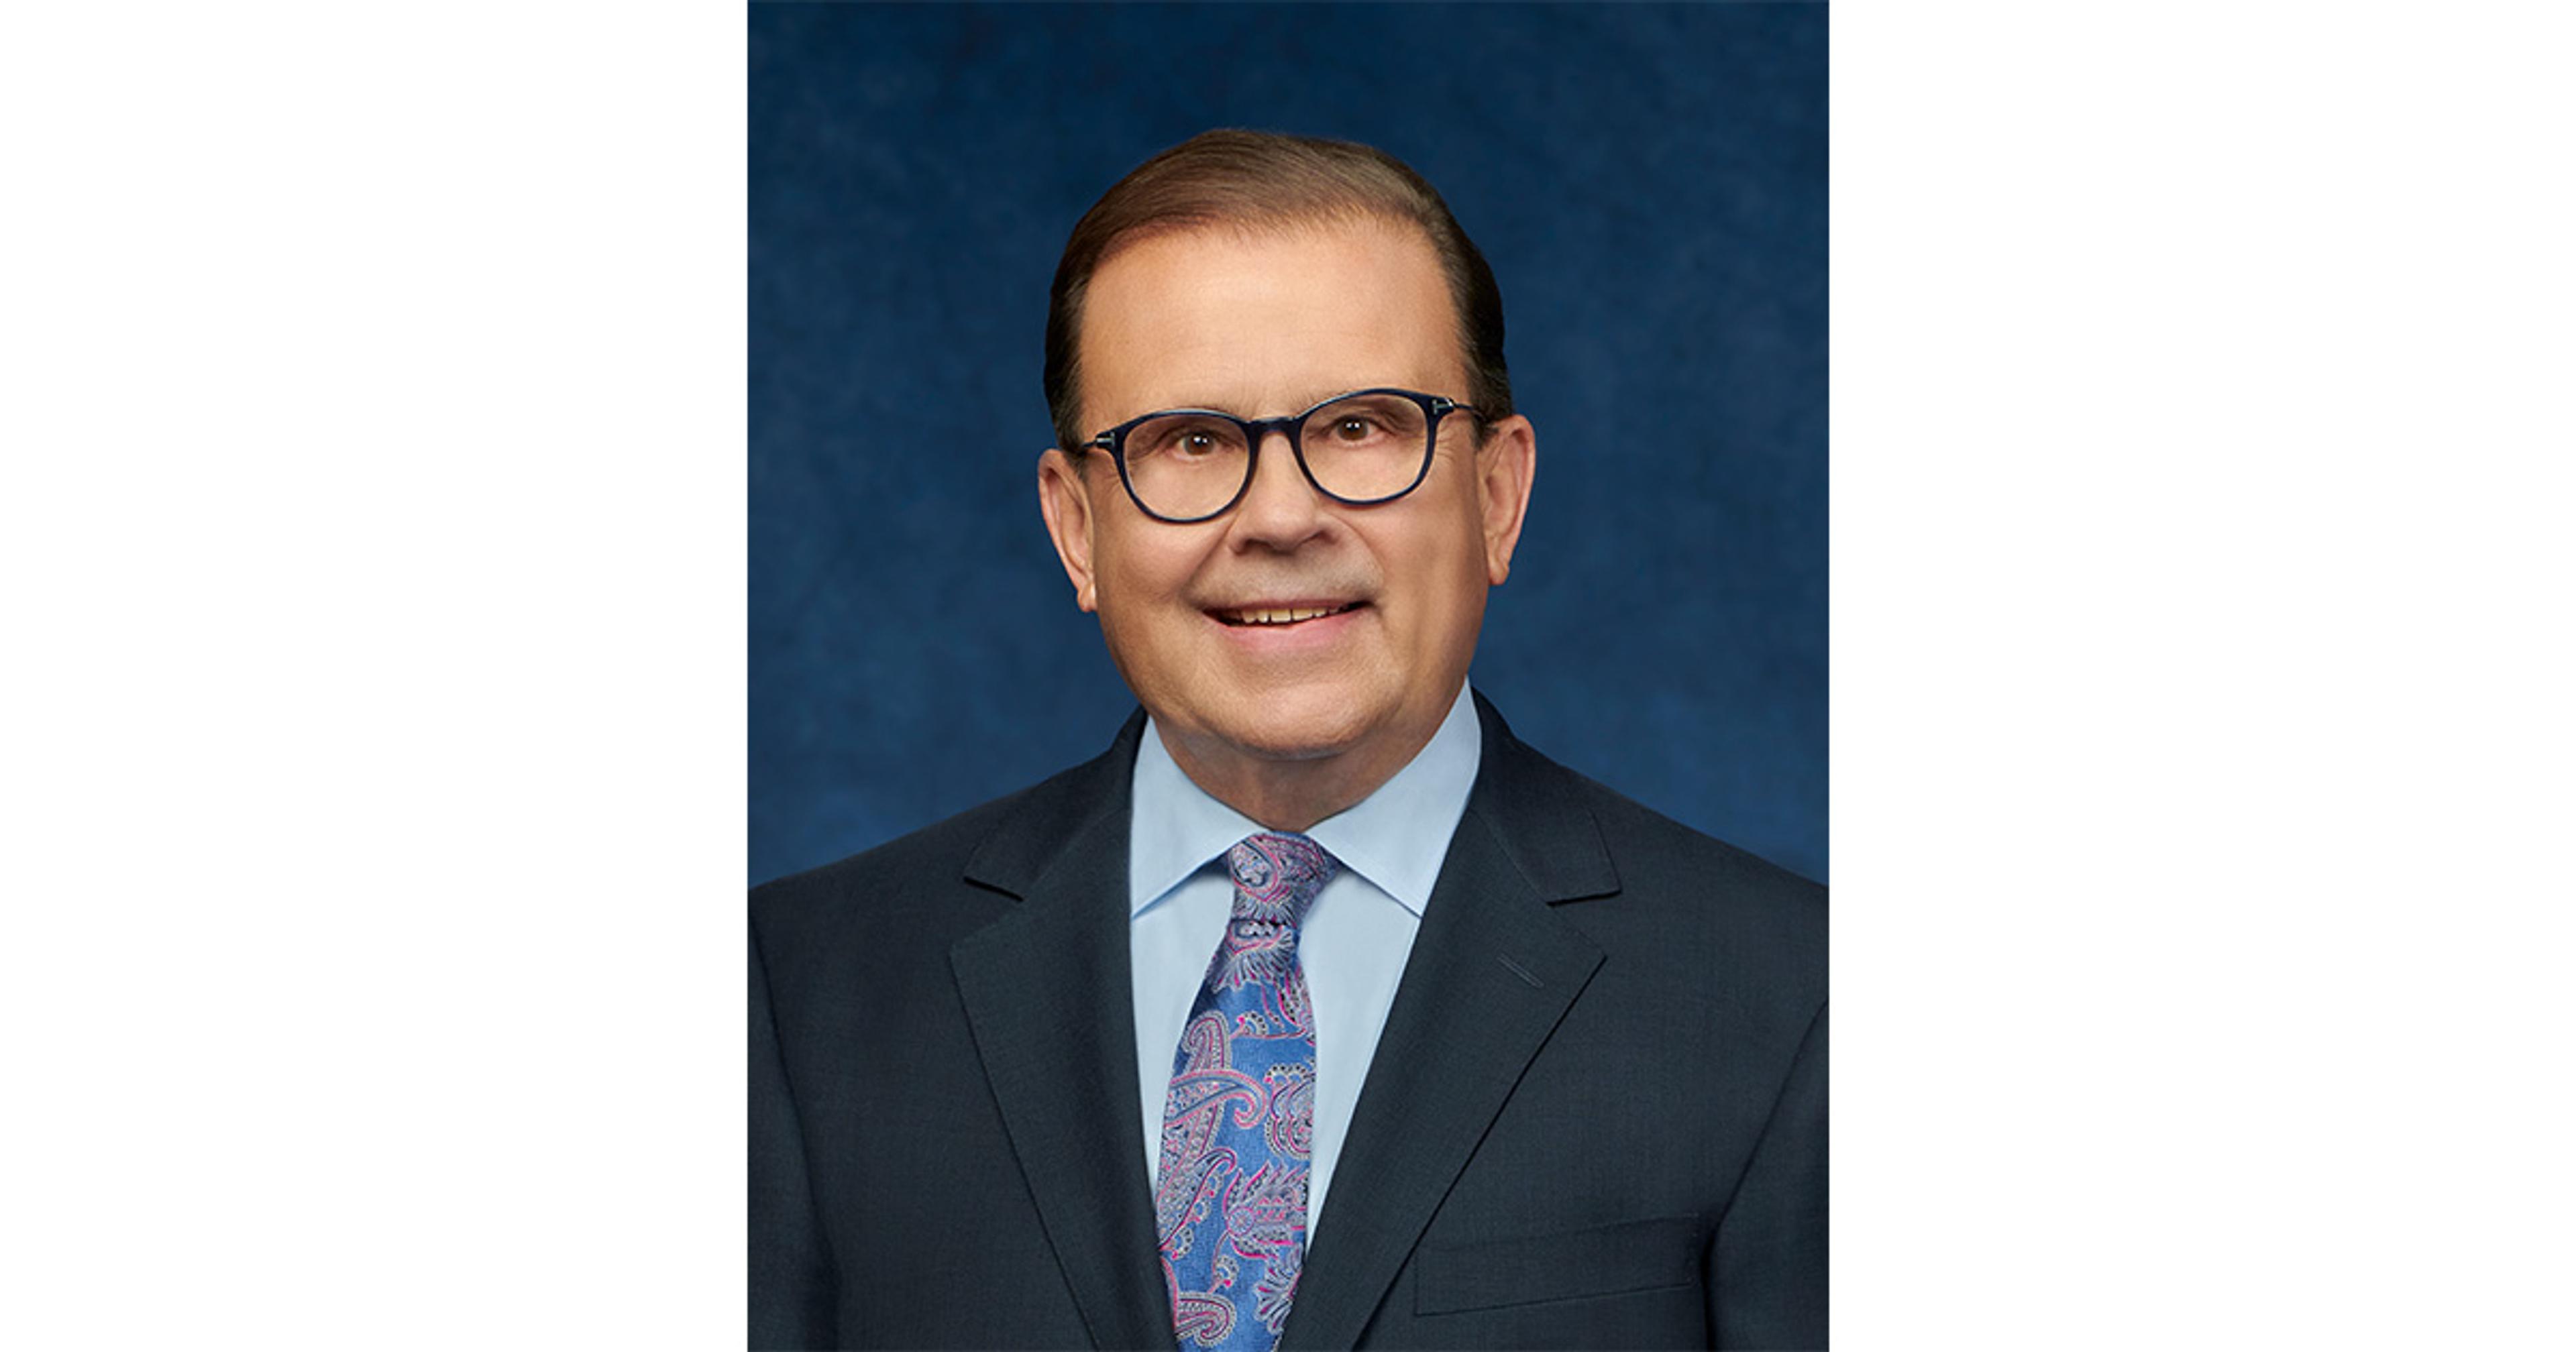 Daniel J. Loepp is President and CEO of Blue Cross Blue Shield of Michigan.